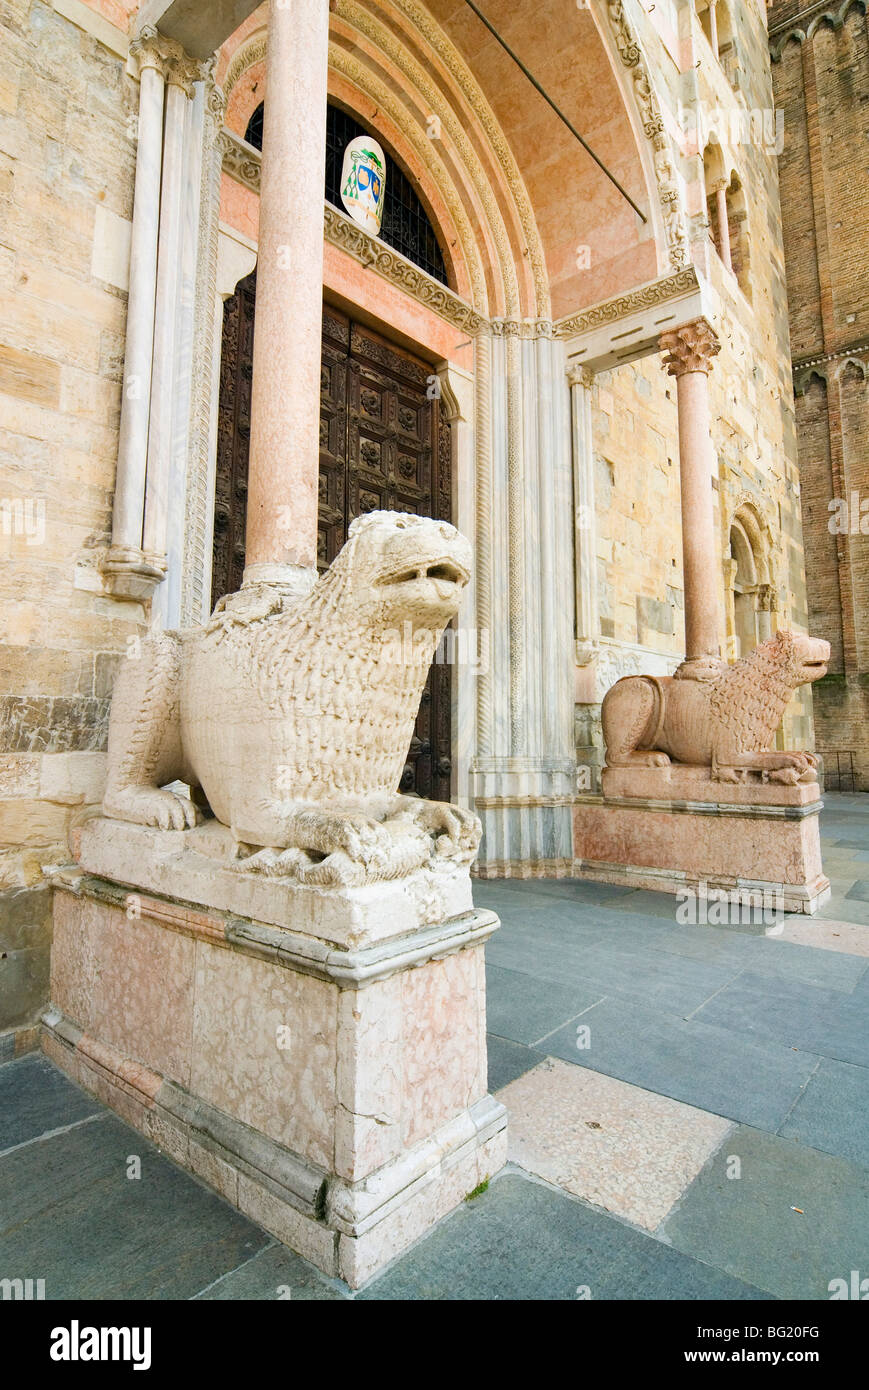 Duomo's facade with two lion statues, Parma, Emilia Romagna, Italy, Europe Stock Photo